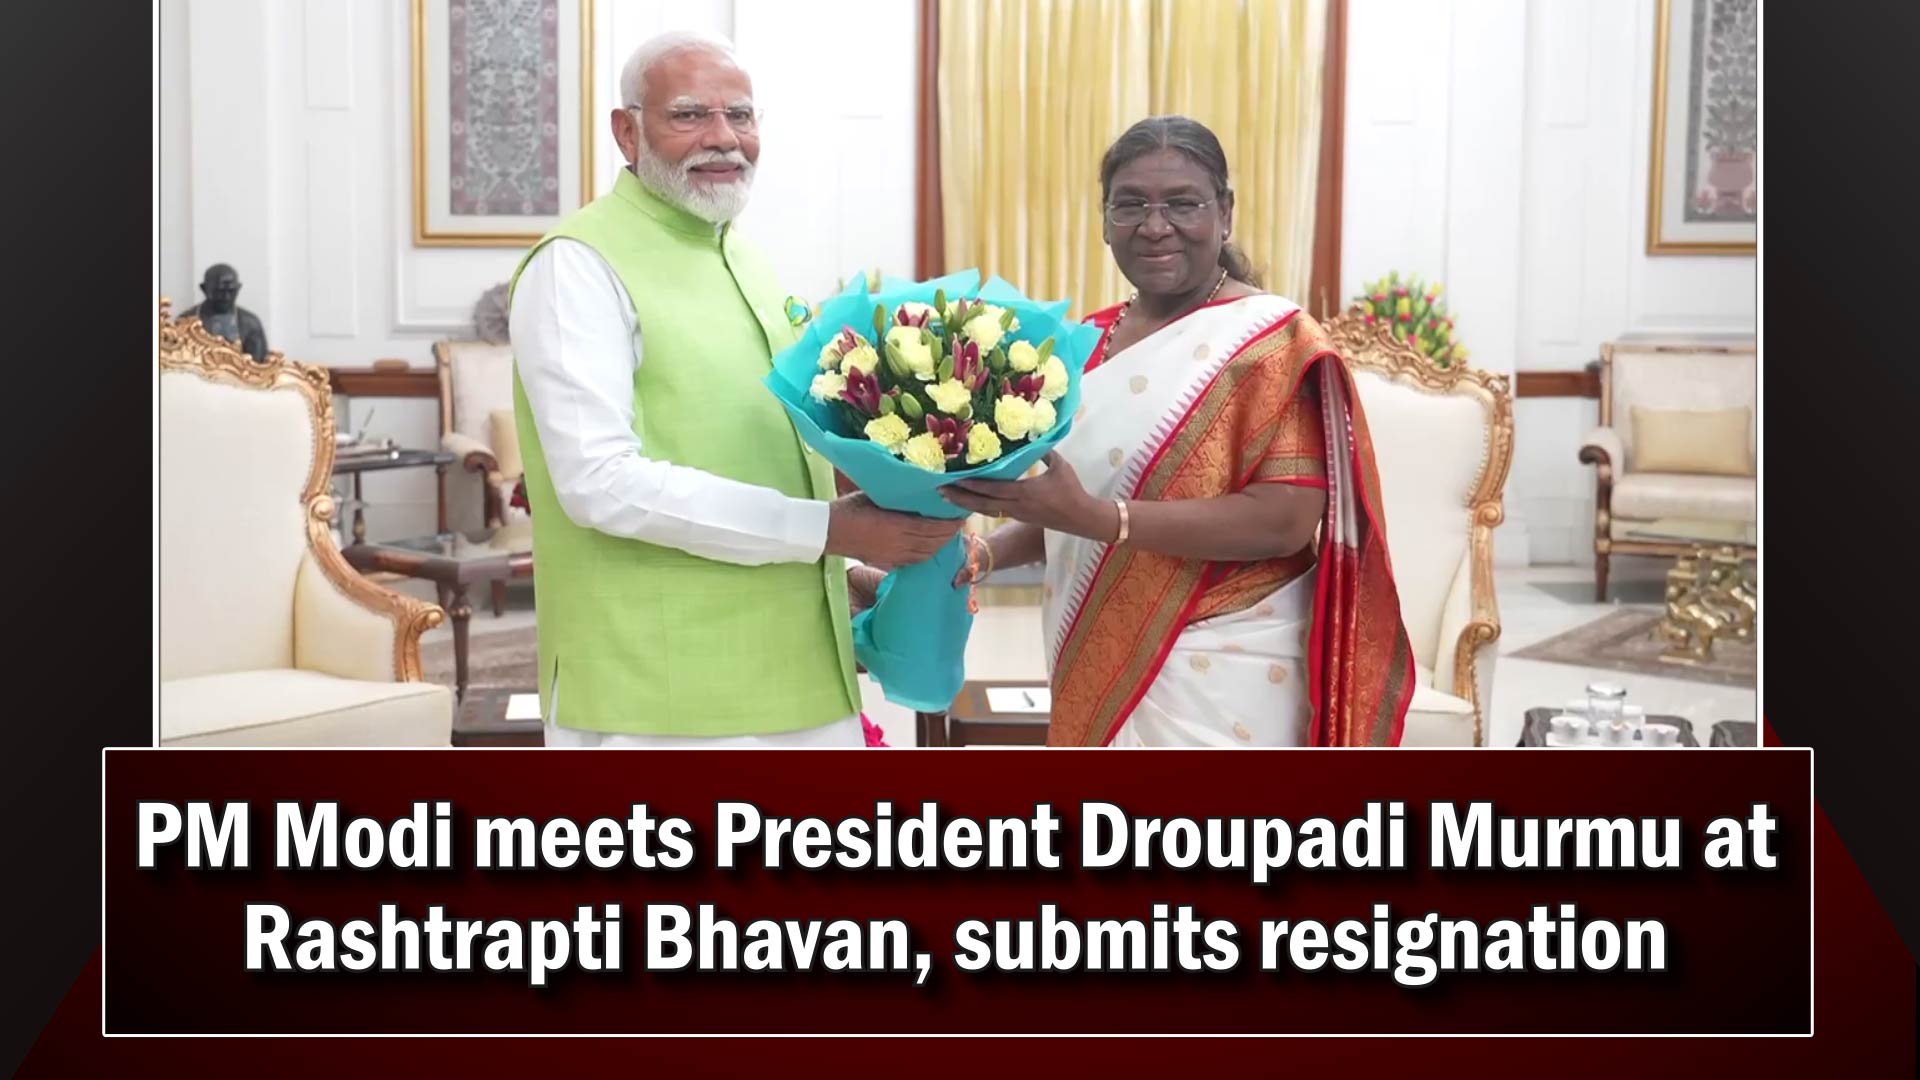 Prime Minister Narendra Modi meets President Droupadi Murmu at Rashtrapti Bhavan, submits resignation